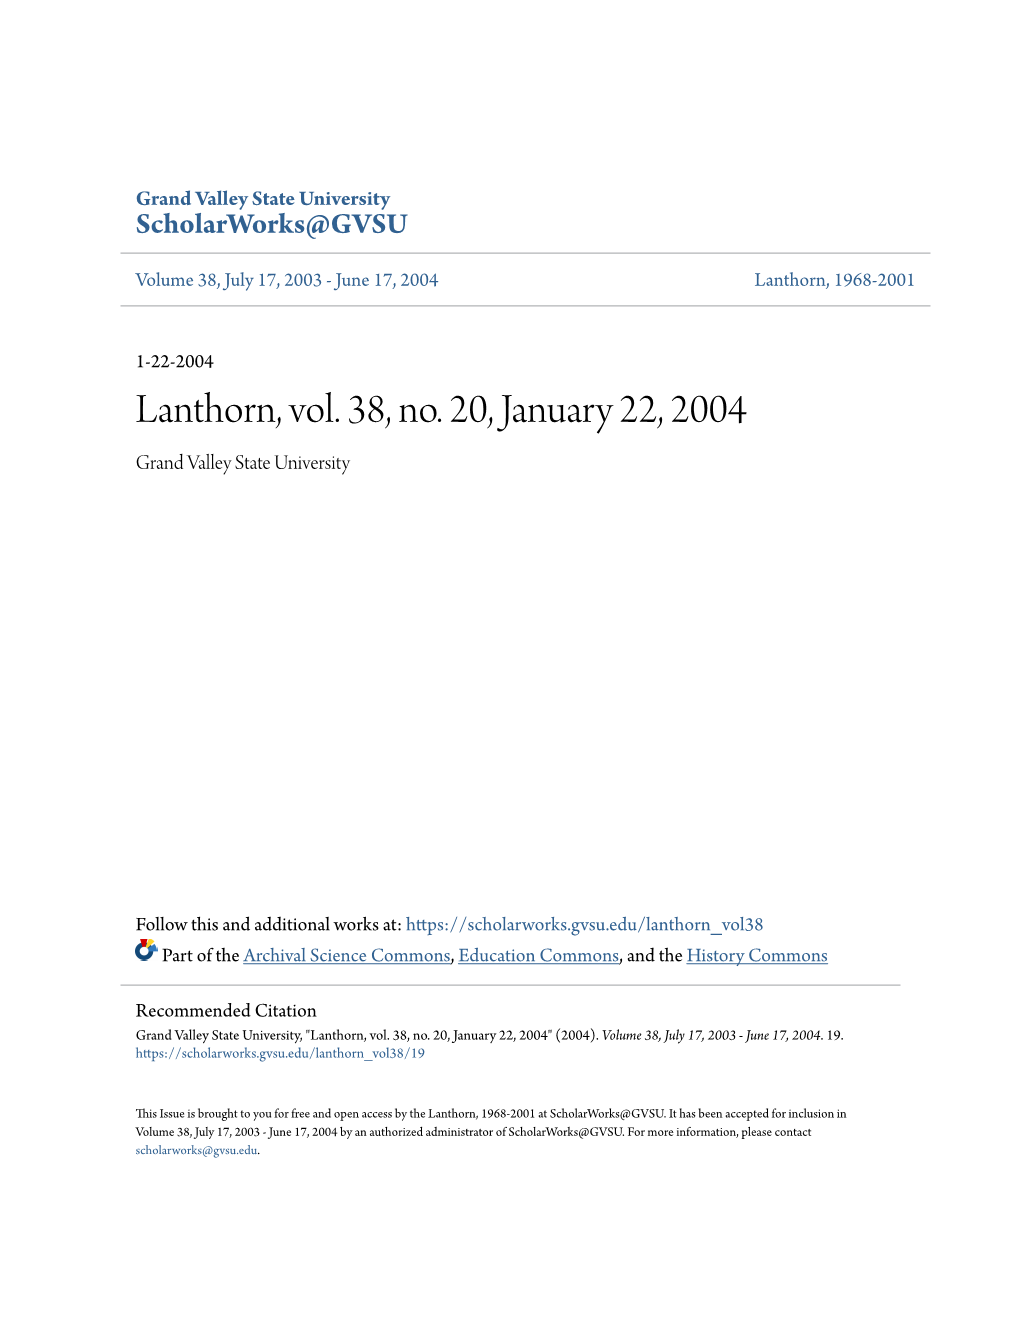 Lanthorn, Vol. 38, No. 20, January 22, 2004 Grand Valley State University